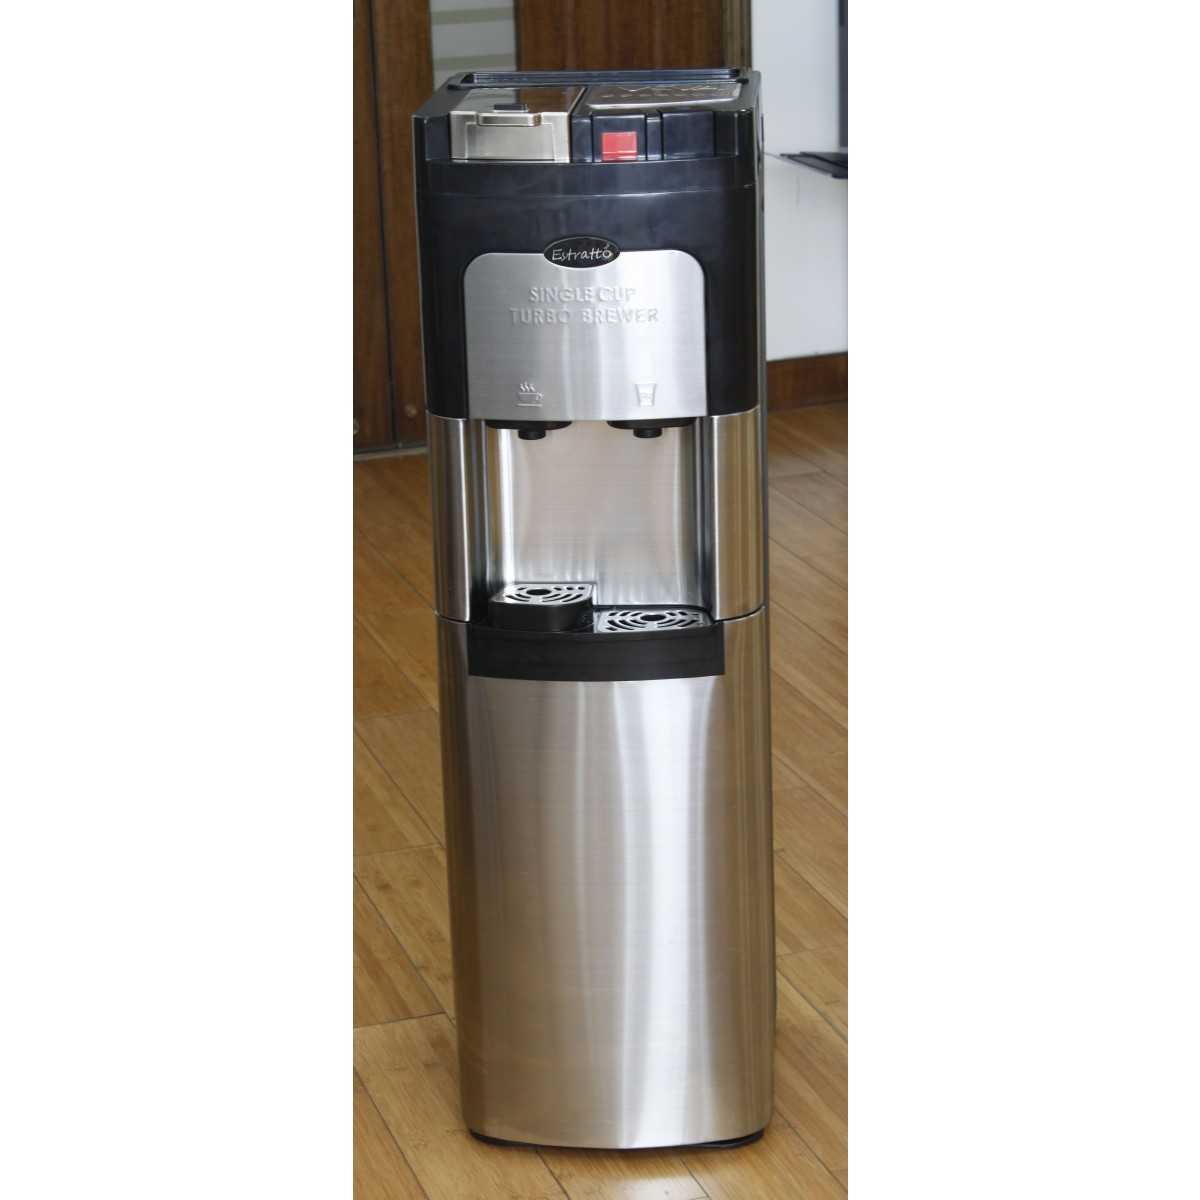 water cooler coffee maker